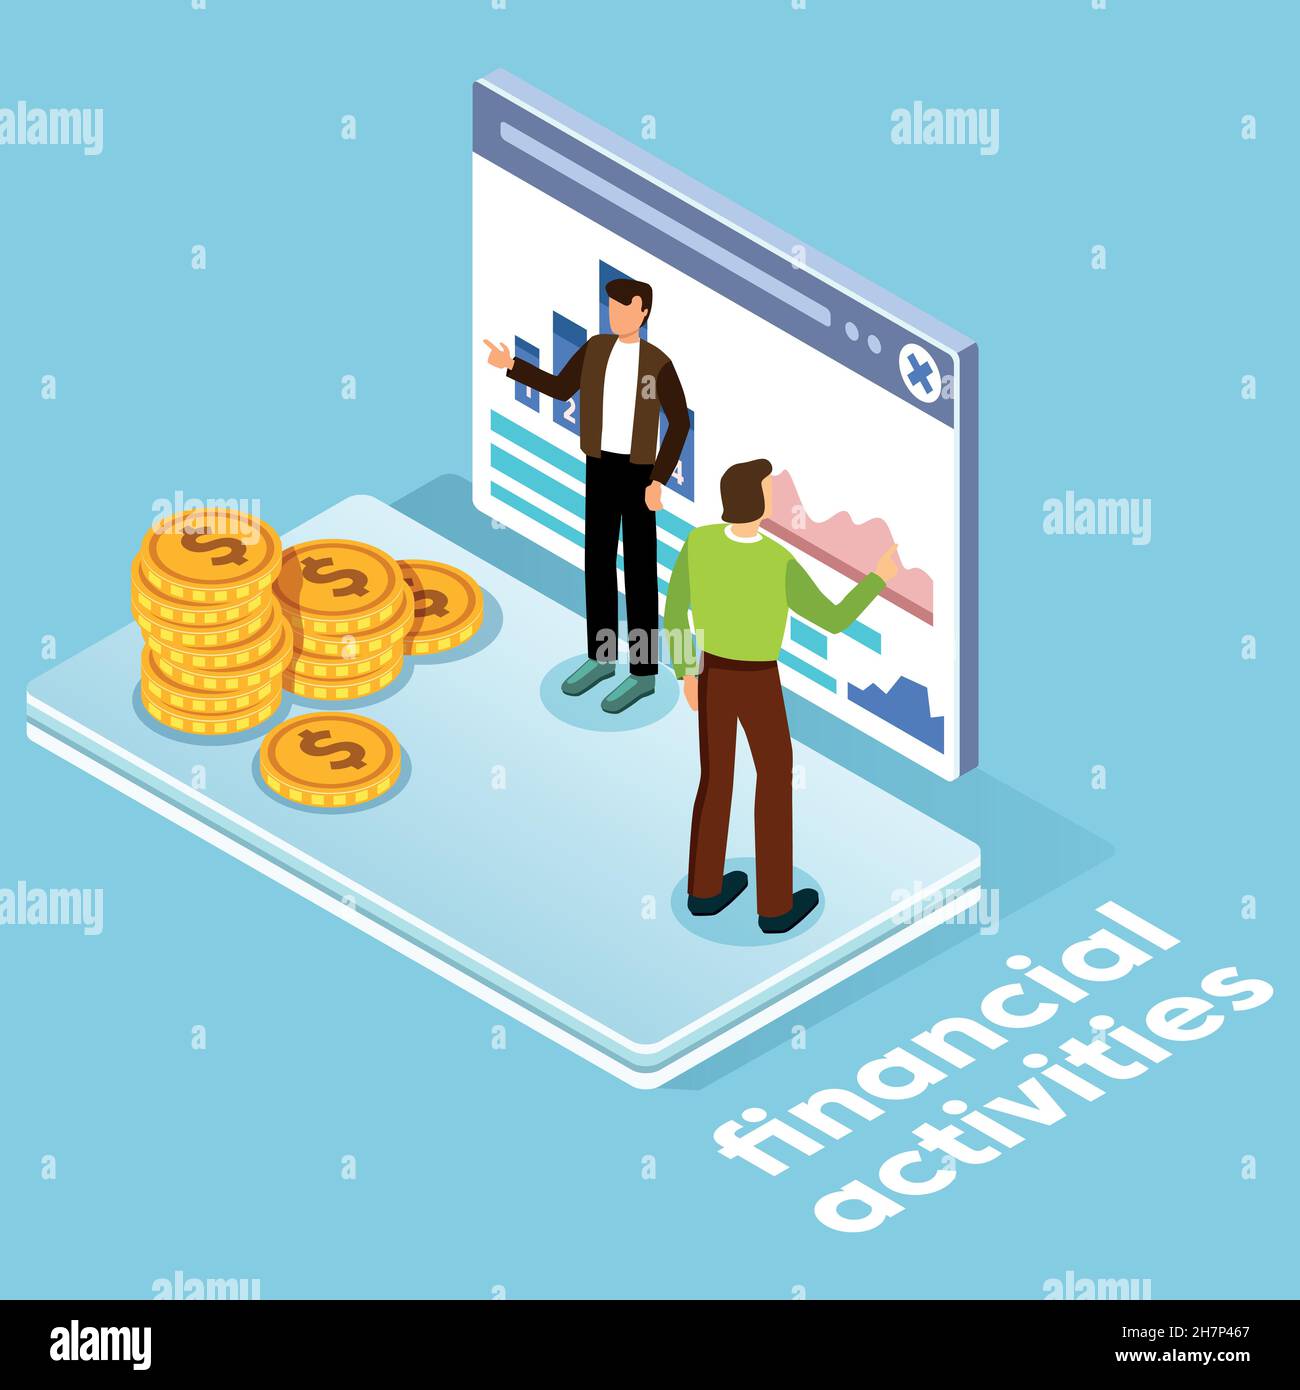 Online shopping. Financial activities. Banking illustration. Vector illustration Stock Vector